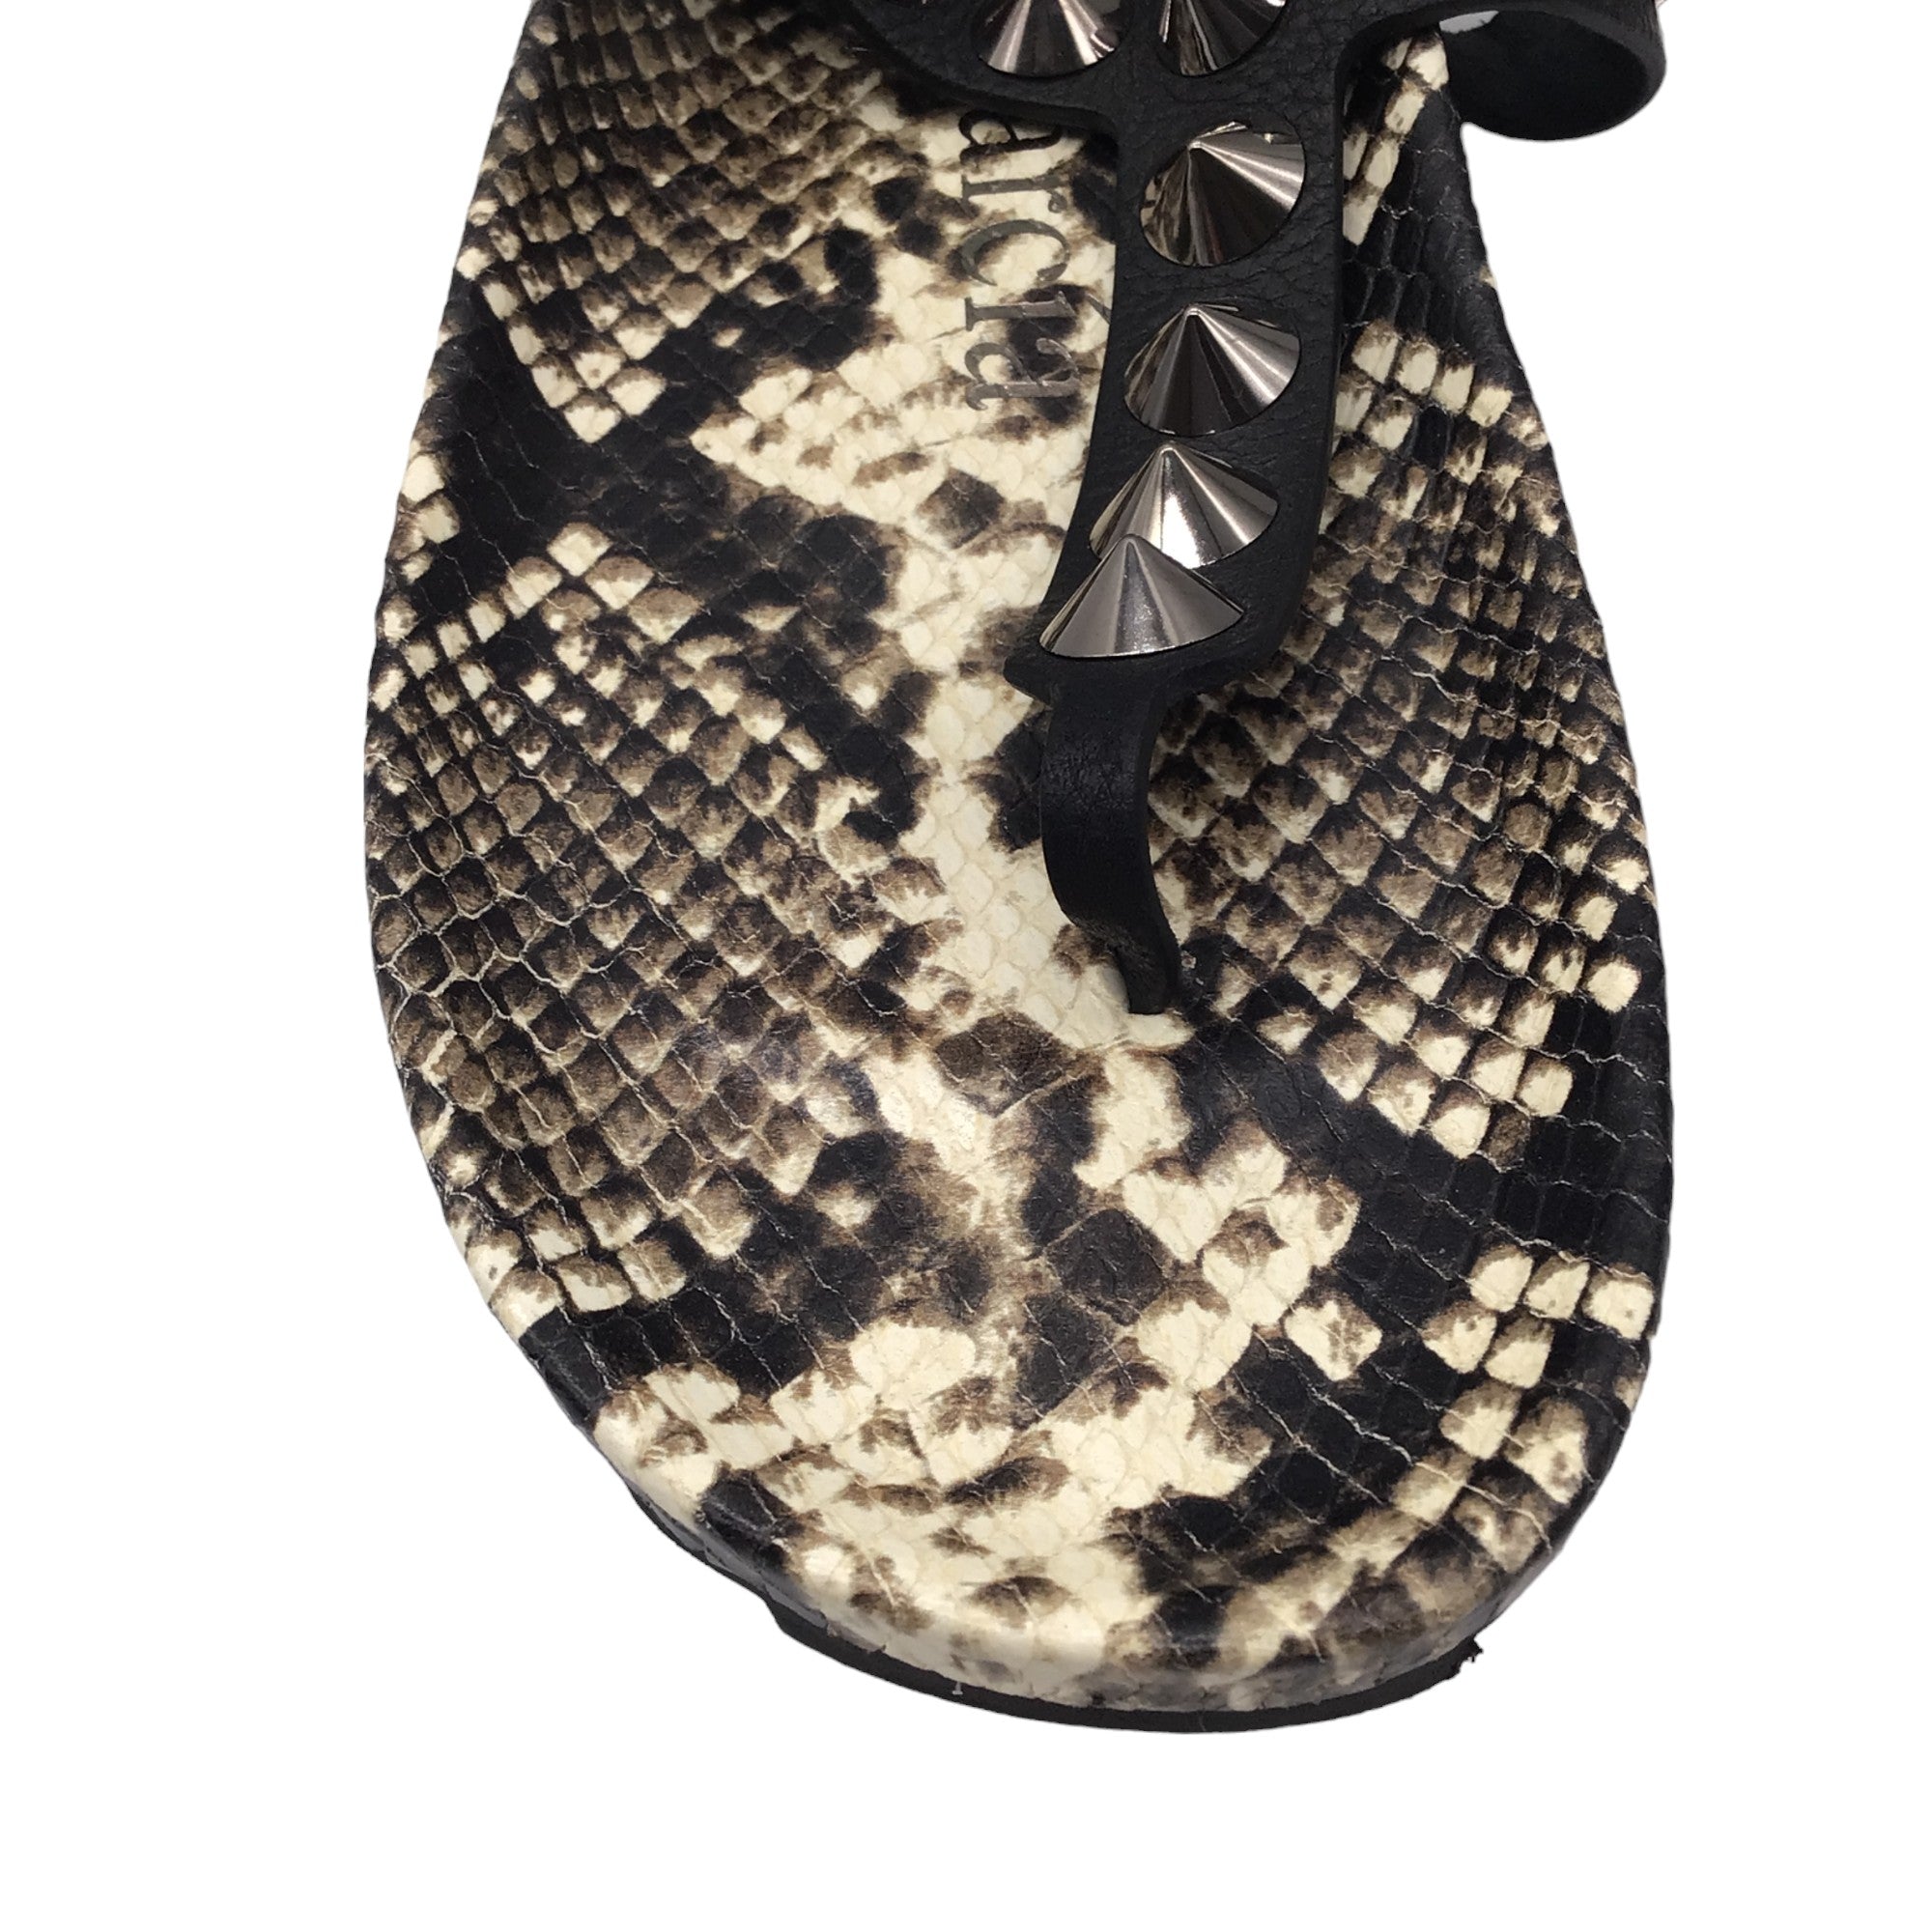 Pedro Garcia Beige / Black Spiked T-Strap Flat Snakeskin Leather Sandals